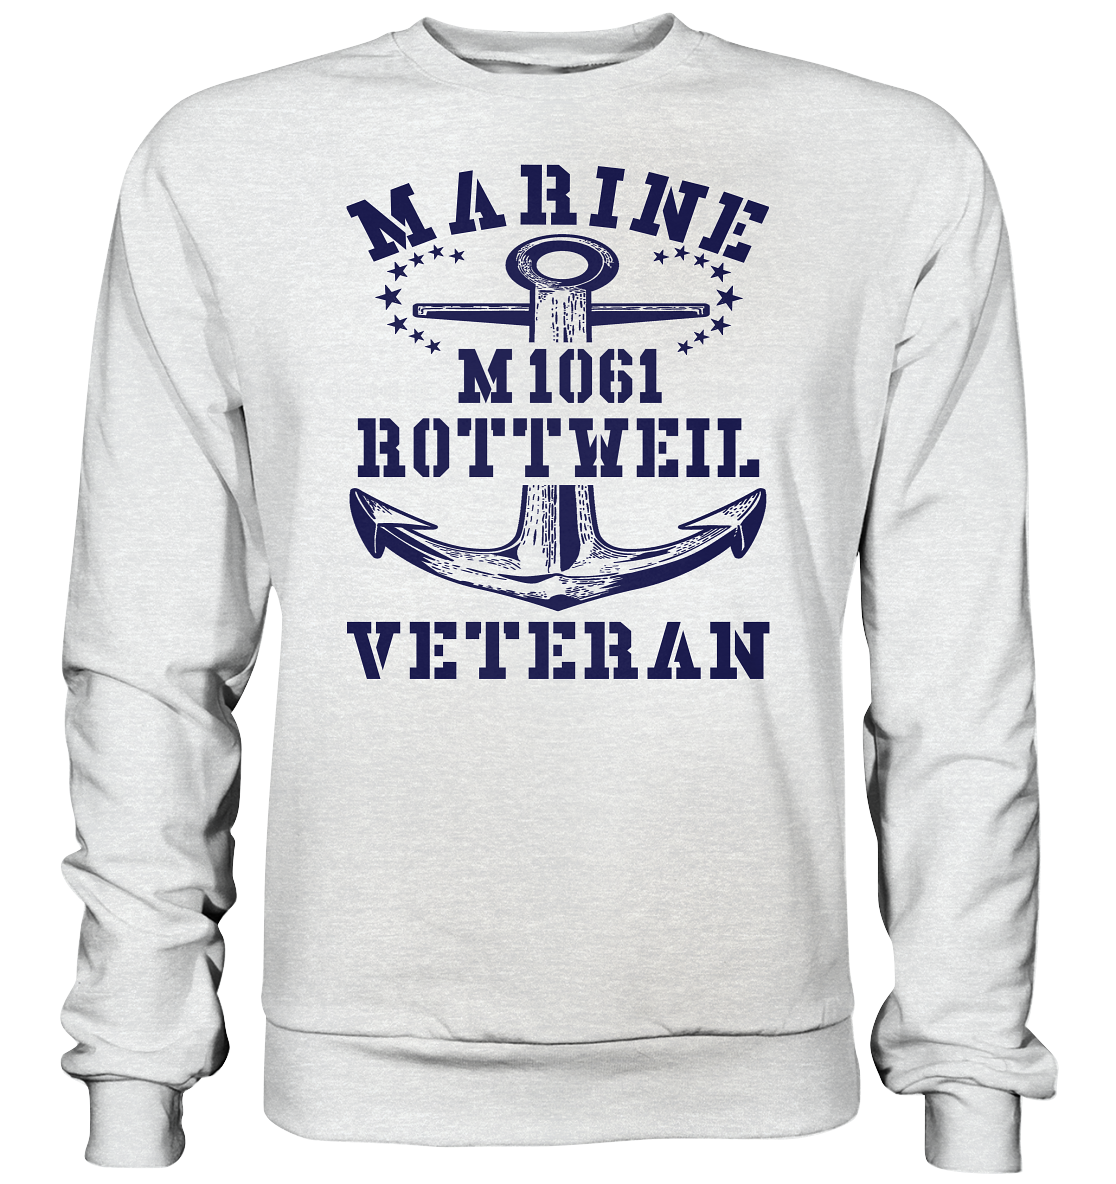 Mij.-Boot M1061 ROTTWEIL Marine Veteran - Premium Sweatshirt